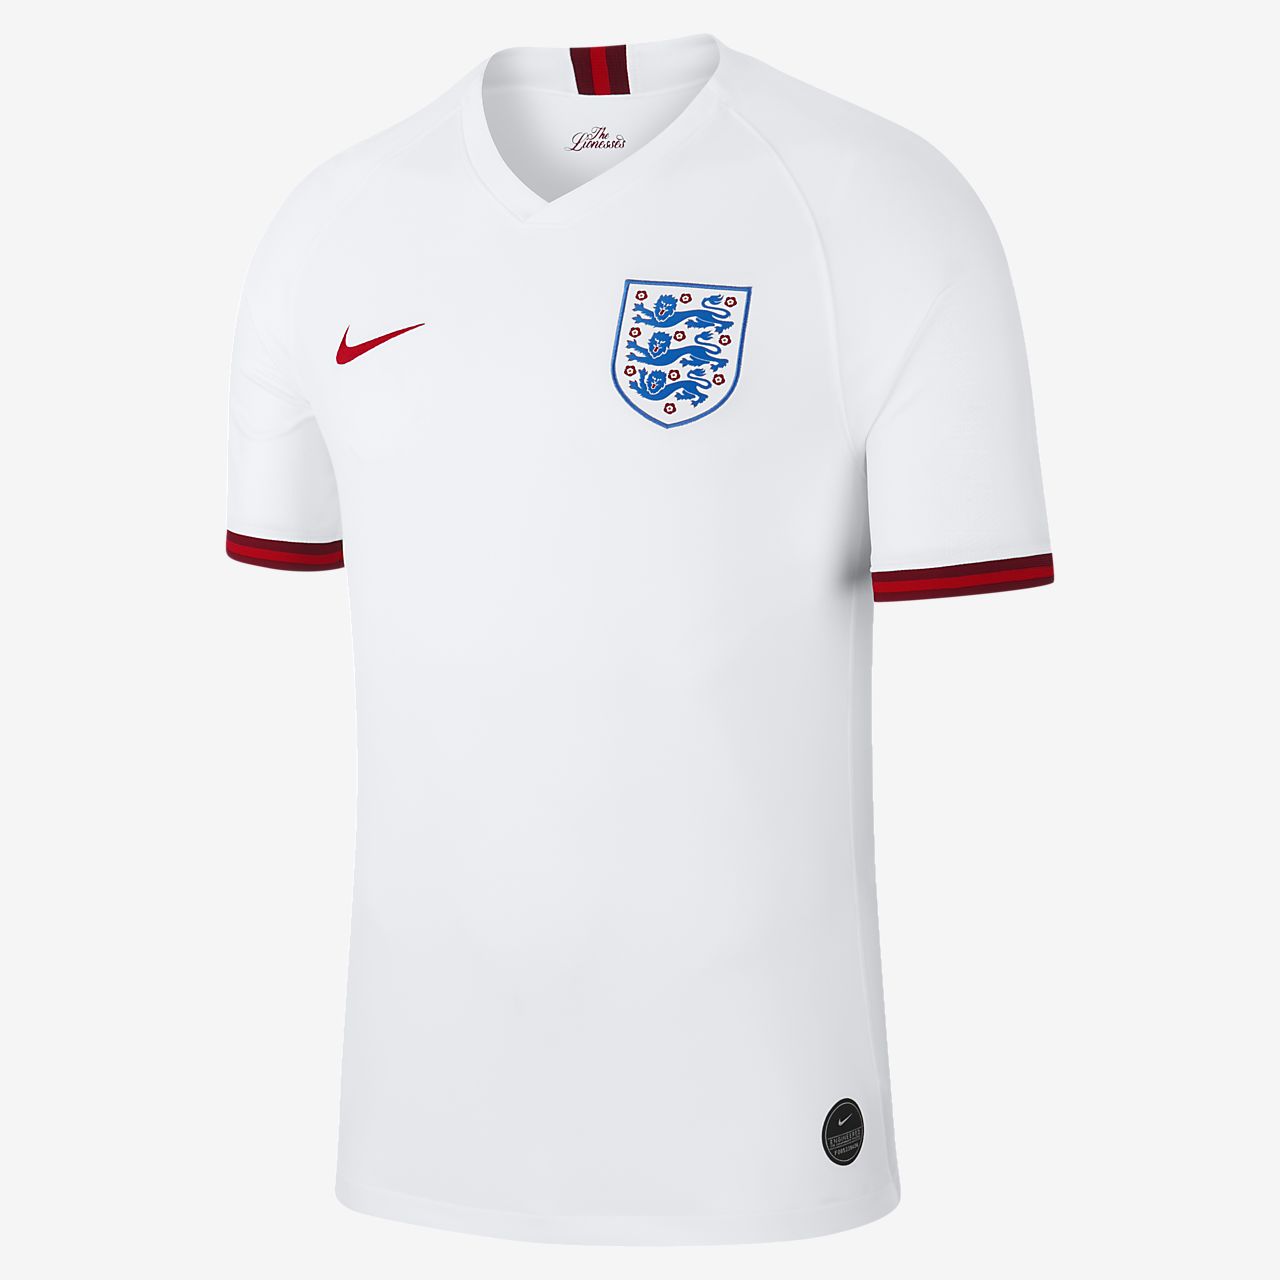 England Football Shirt : England Home Kit By Peter Saville For Umbro ...